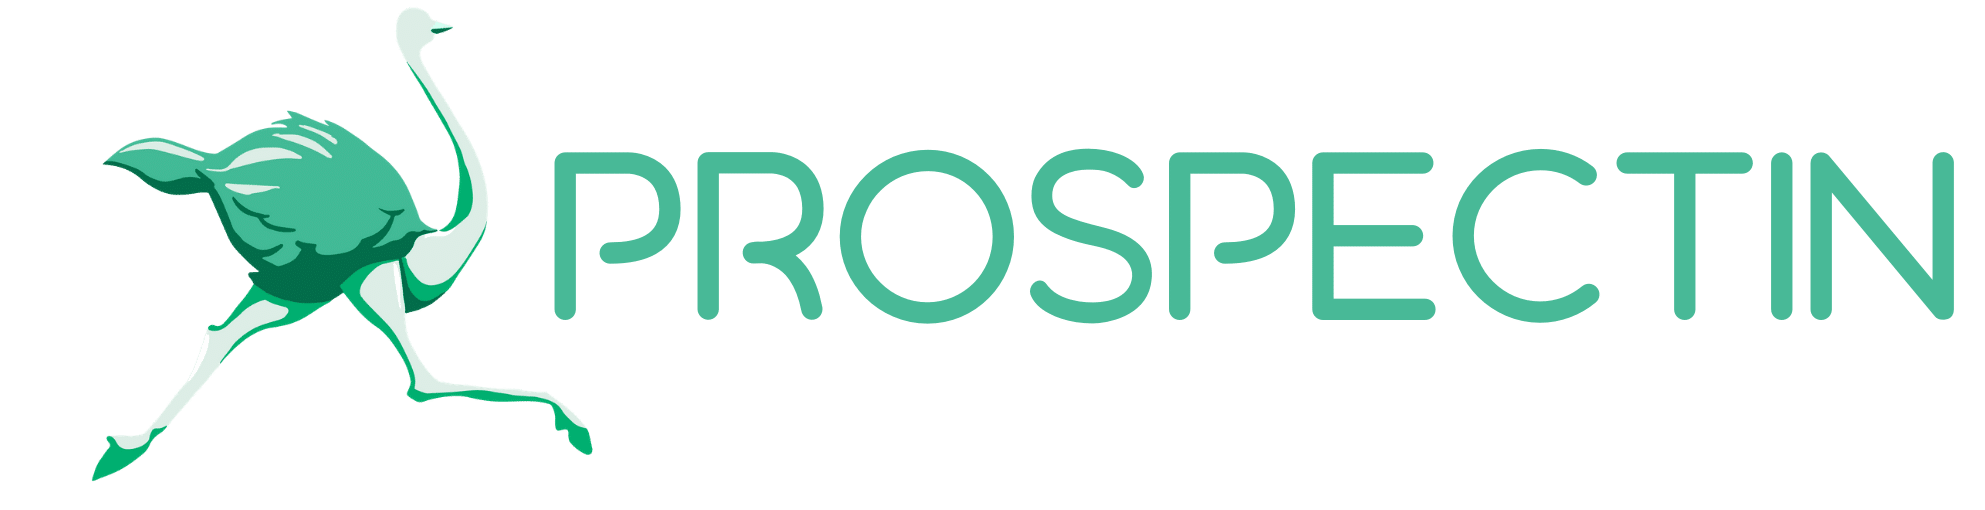 ProspectIn linkedin automation tool logo